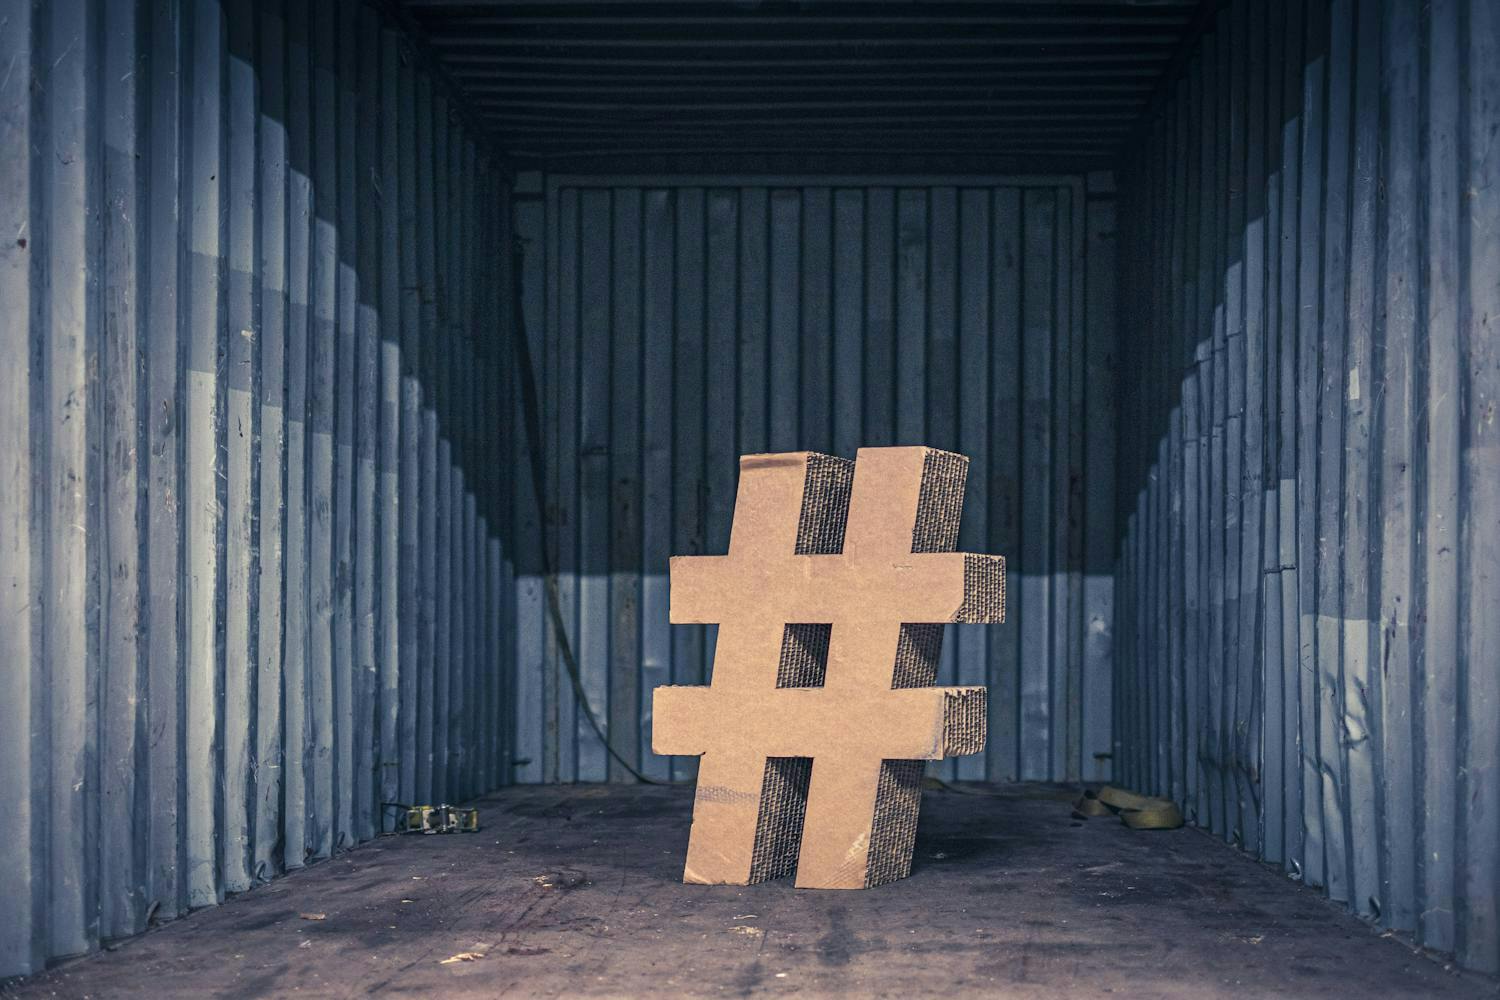 Hashtag symbol, Instagram marketing tactic